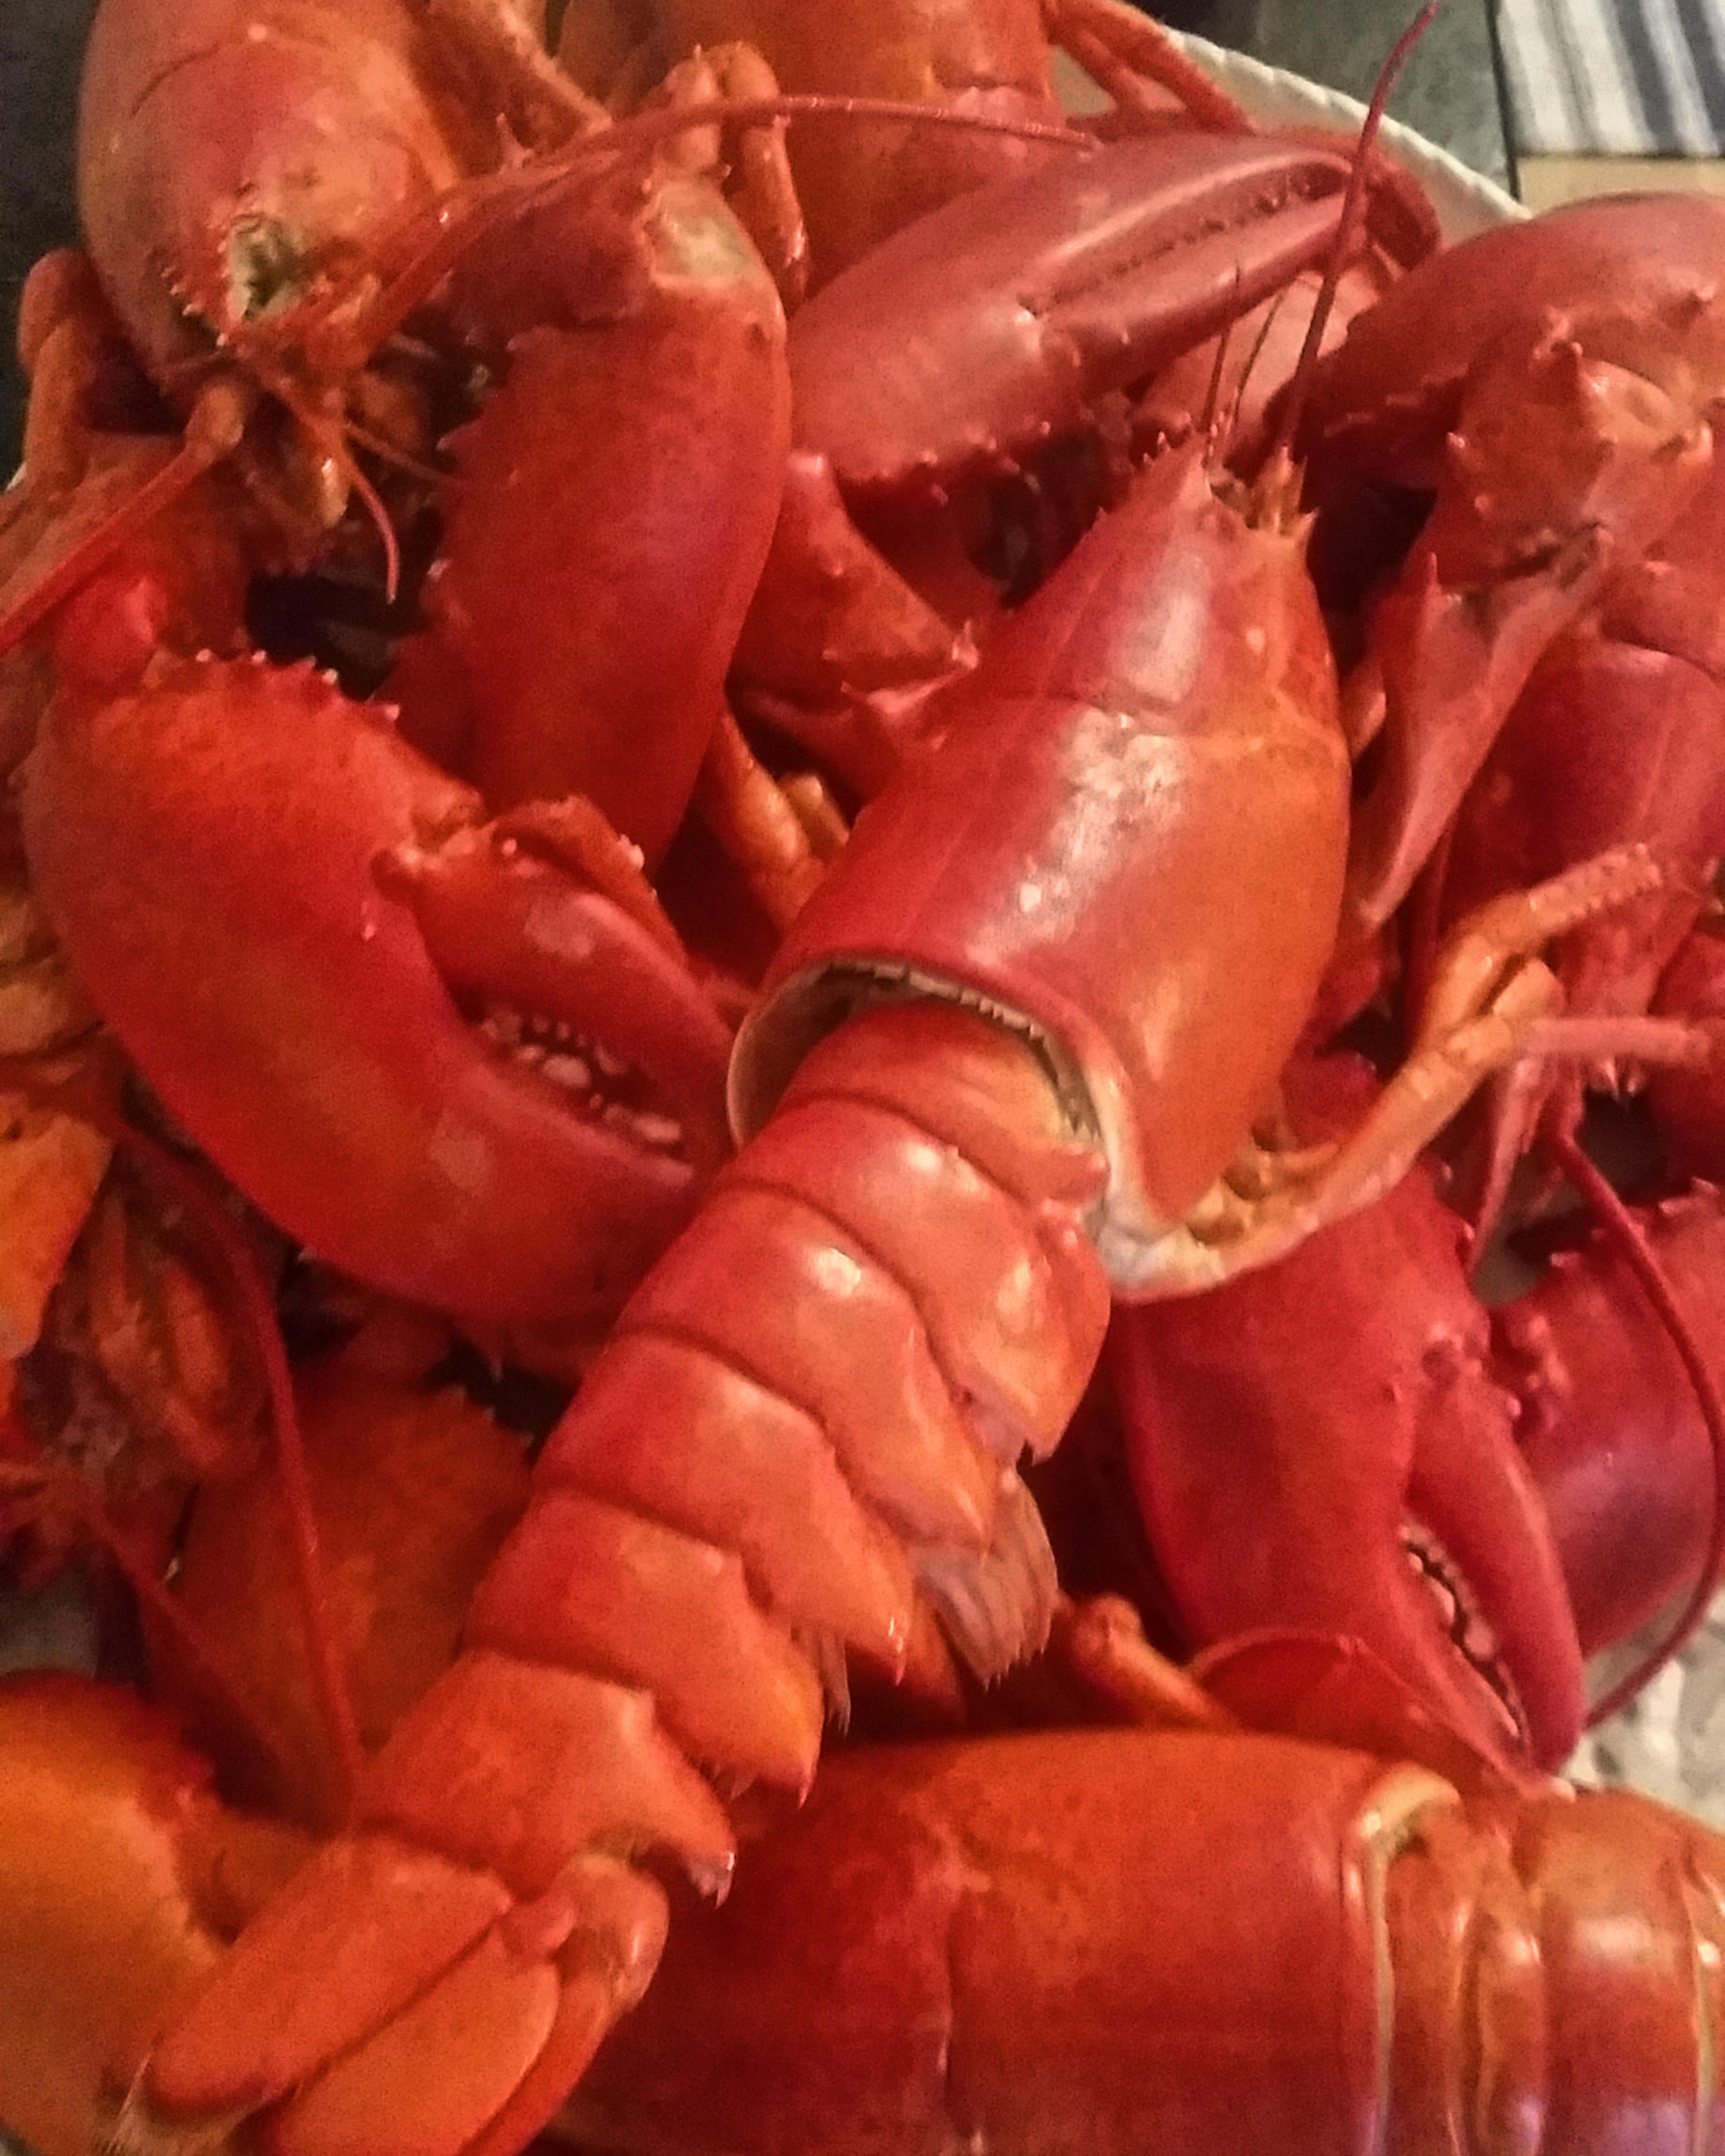 Lobsters on the restaurant menu